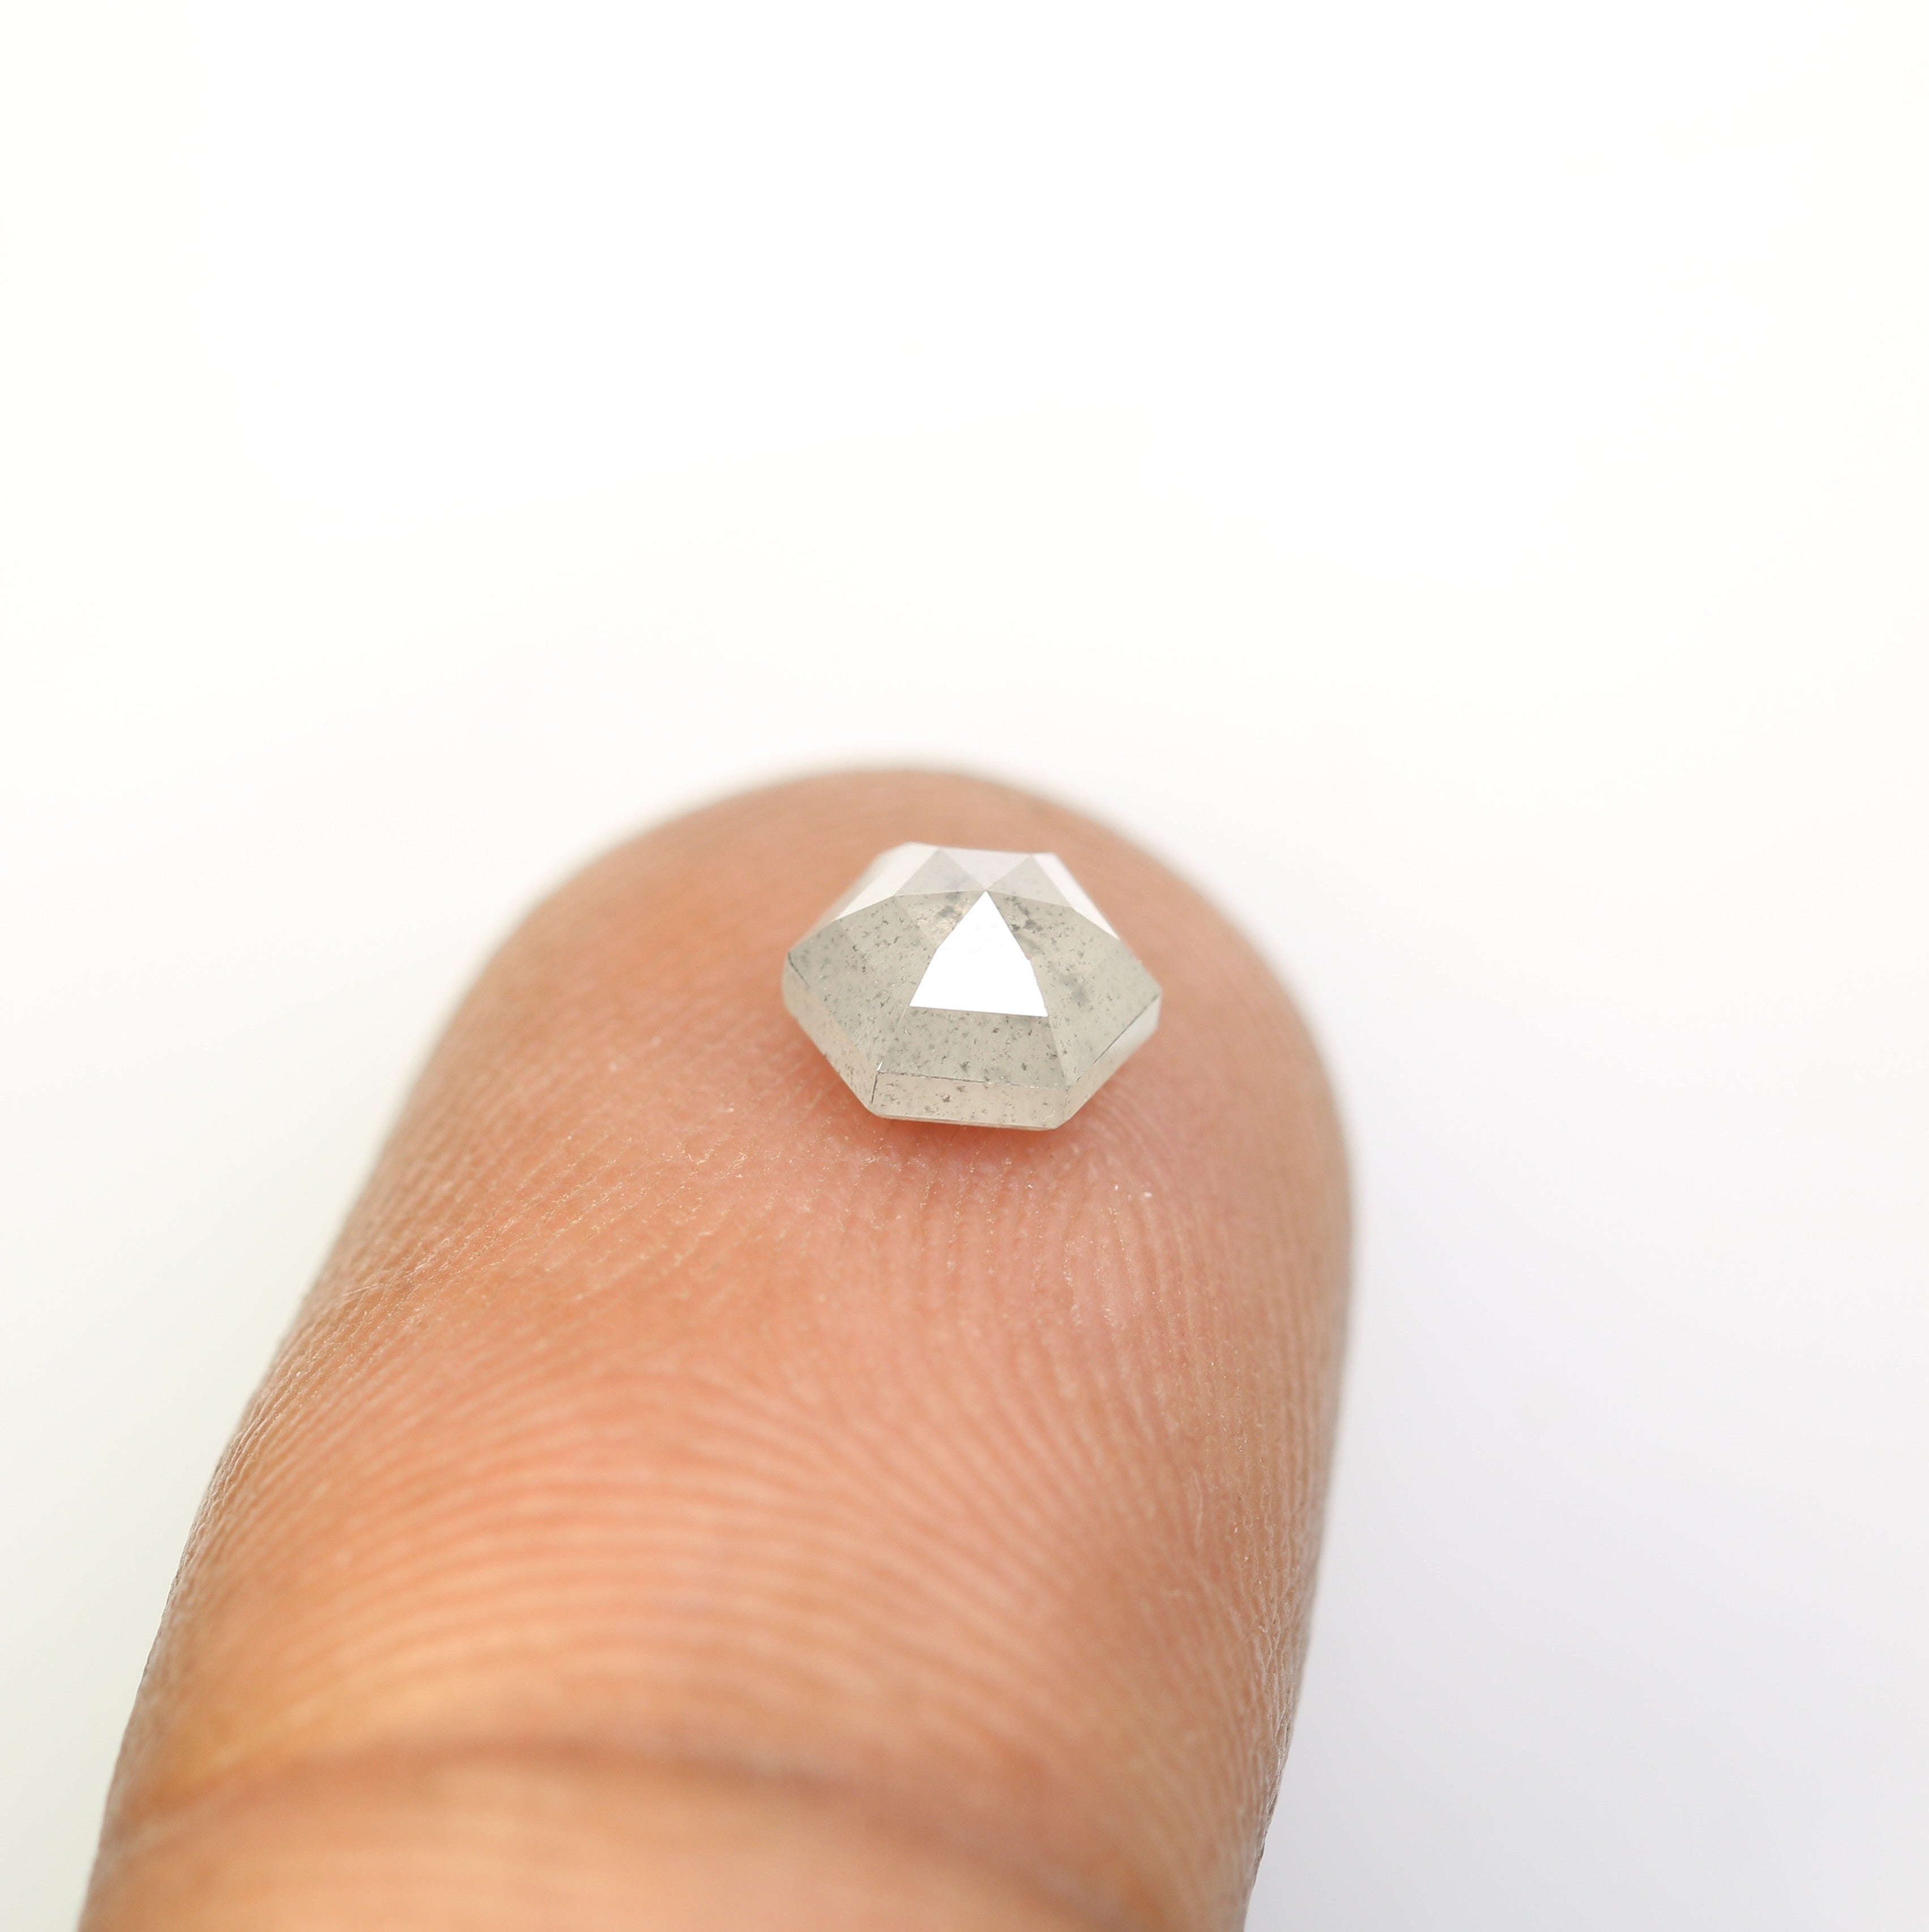 0.95 CT Hexagon Shape Salt And Pepper Diamond For Engagement Ring